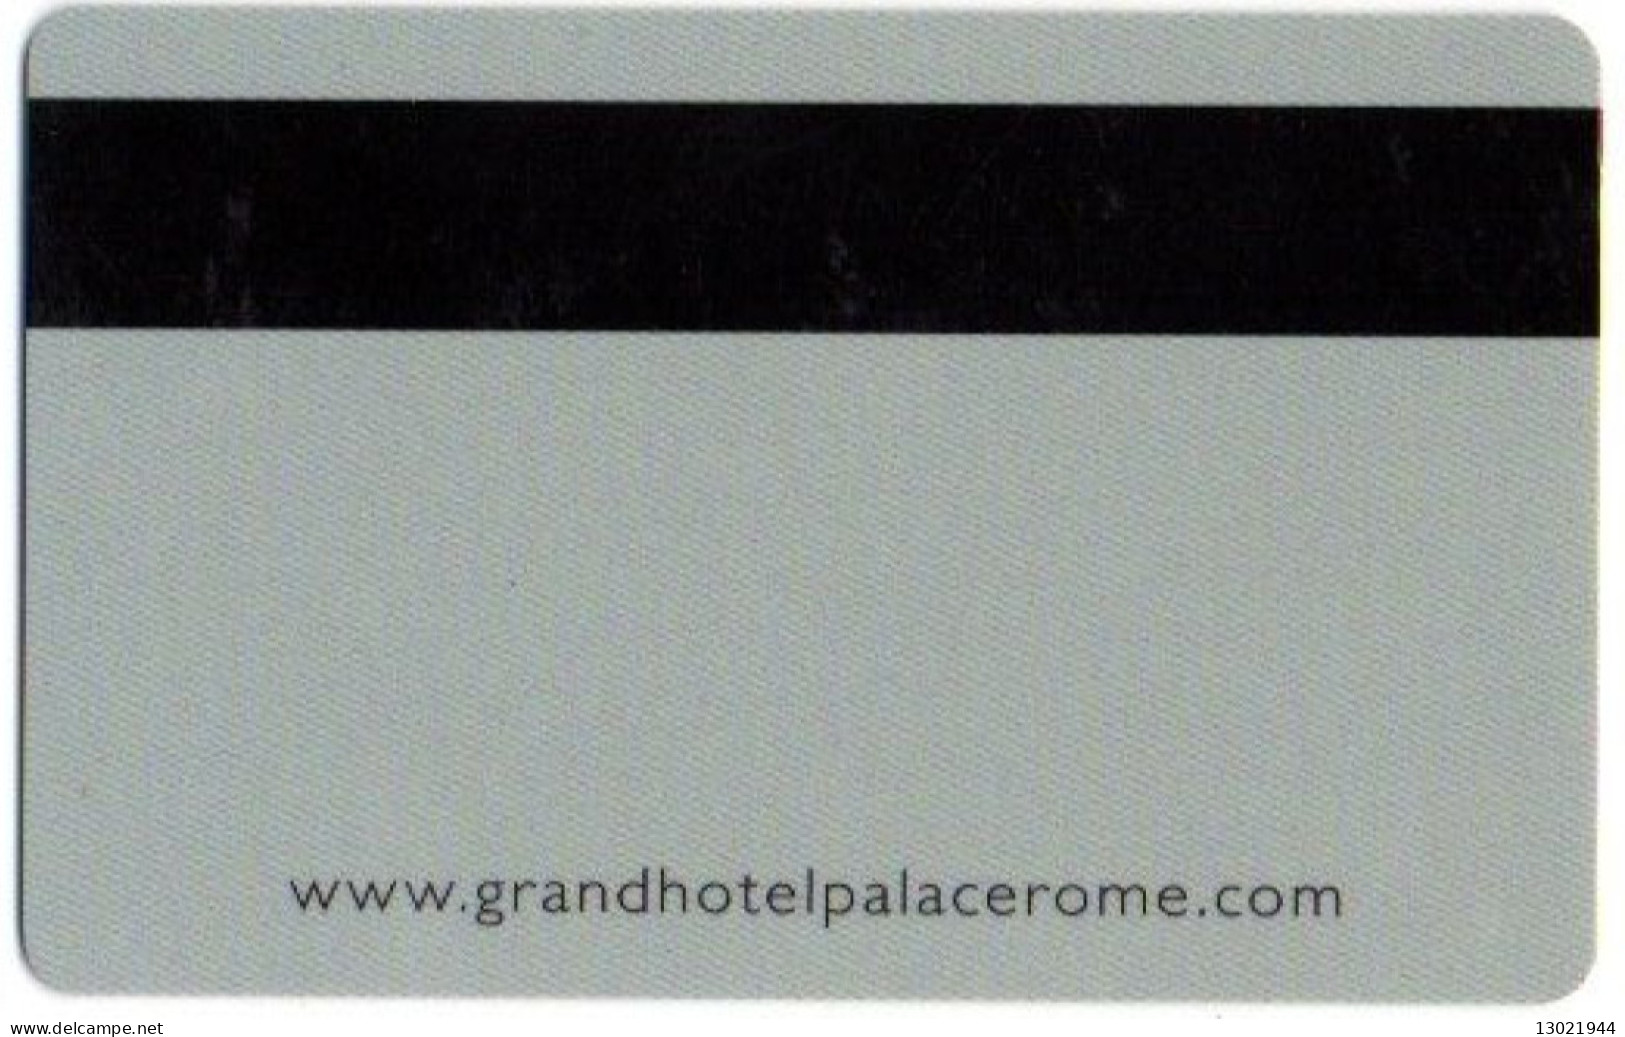 ITALIA  KEY HOTEL   Grand Hotel Palace Rome - Hotelkarten